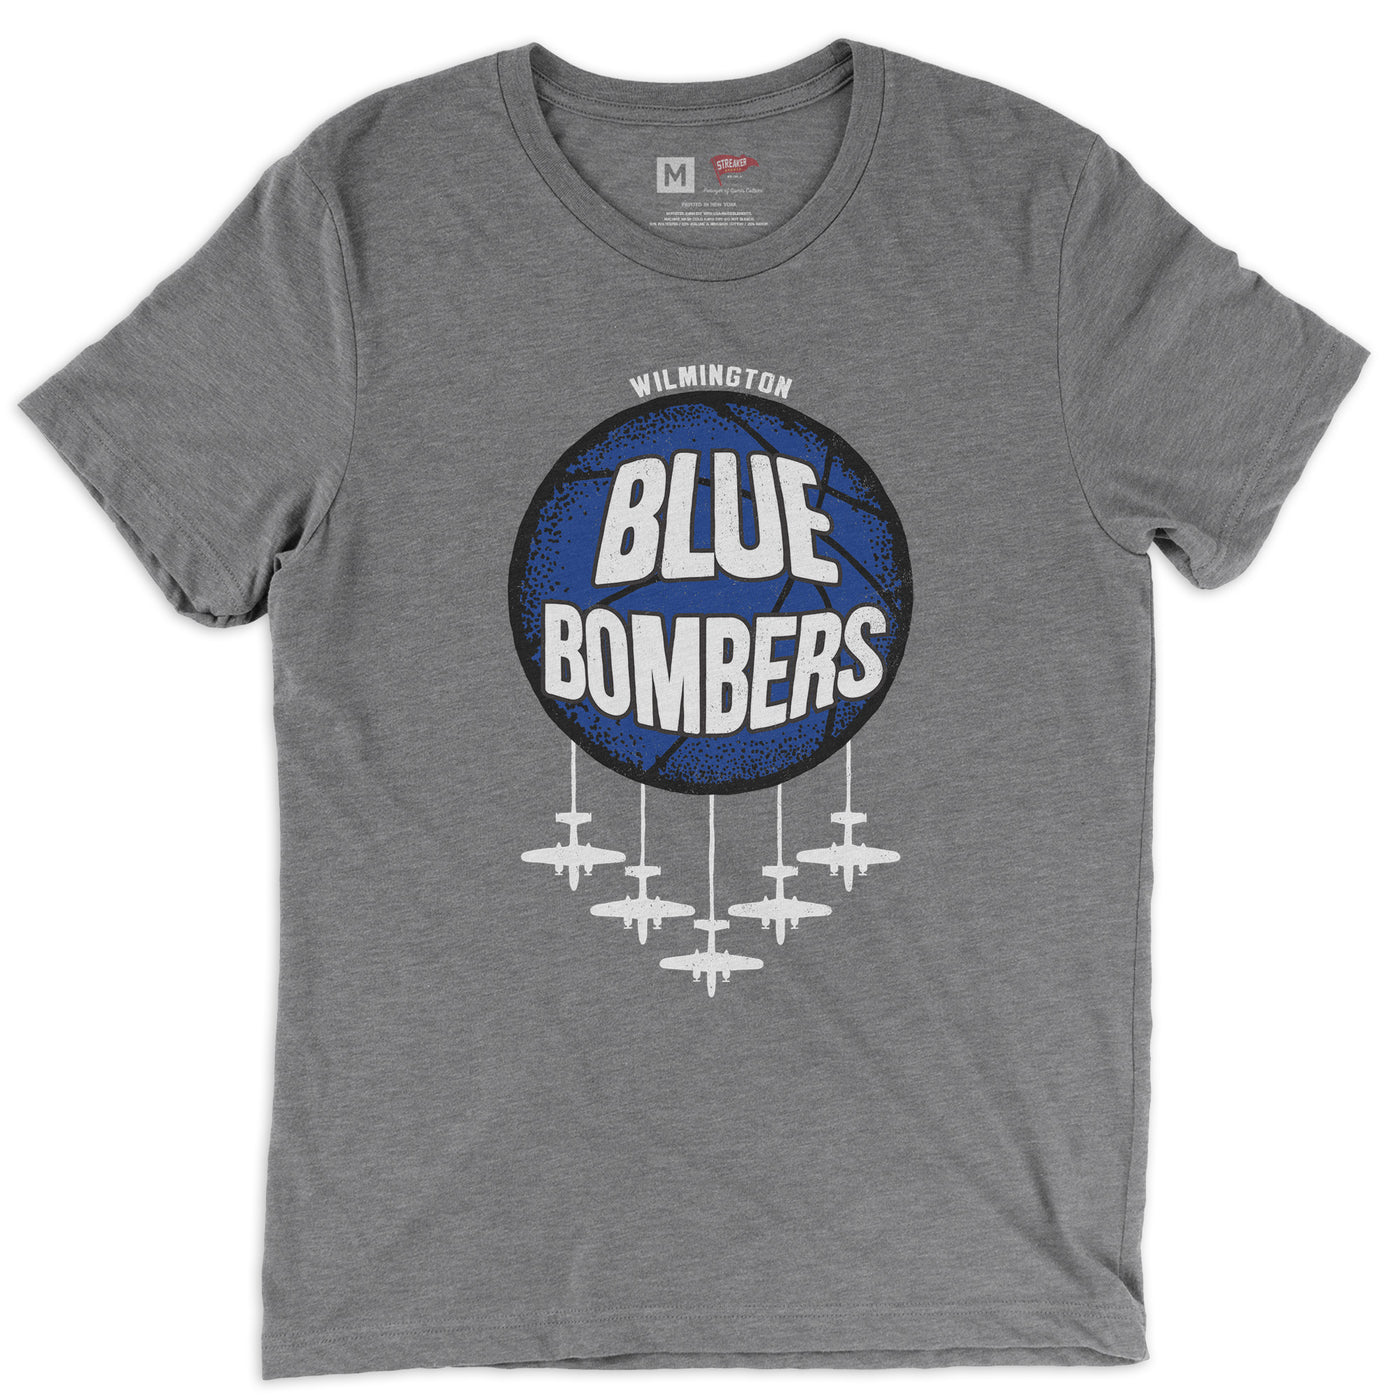 Wilmington Blue Bombers Tee Grey - Streaker Sports